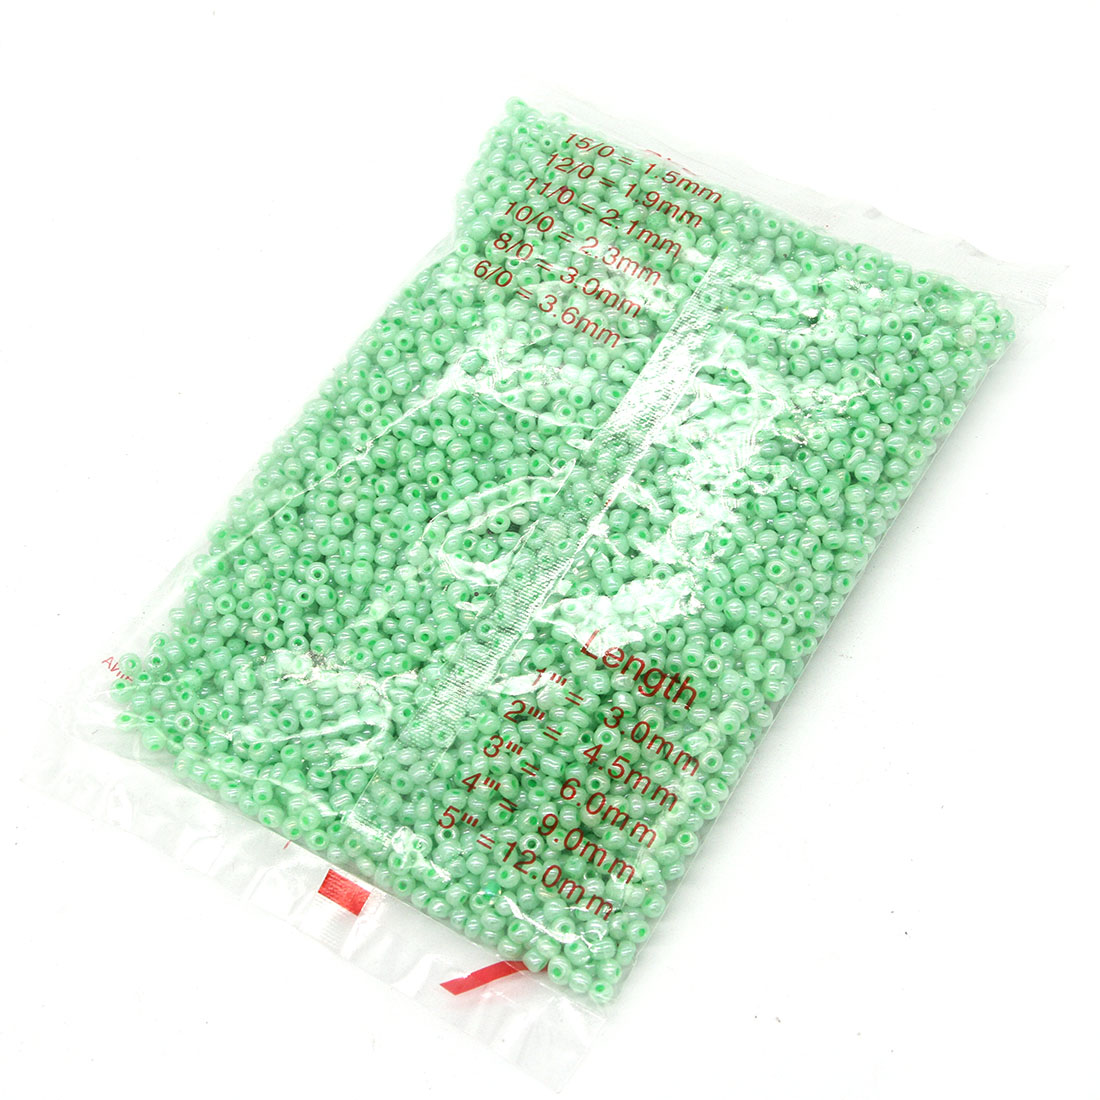 Olive green 3mm 10,000 packs